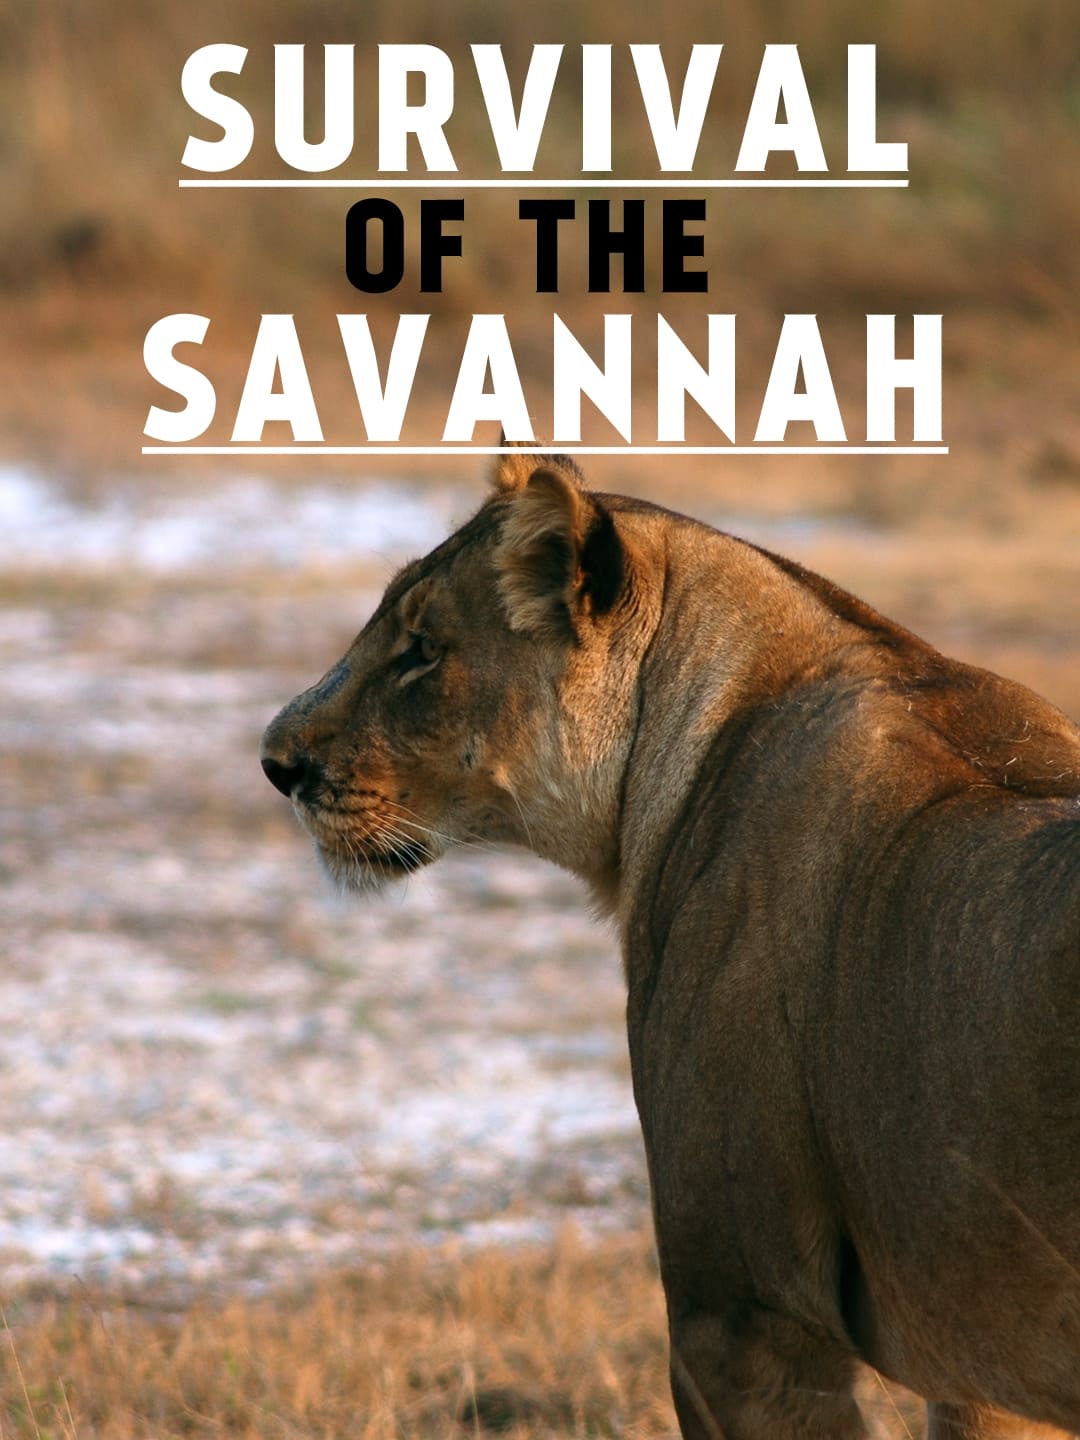 Survival on the Savannah